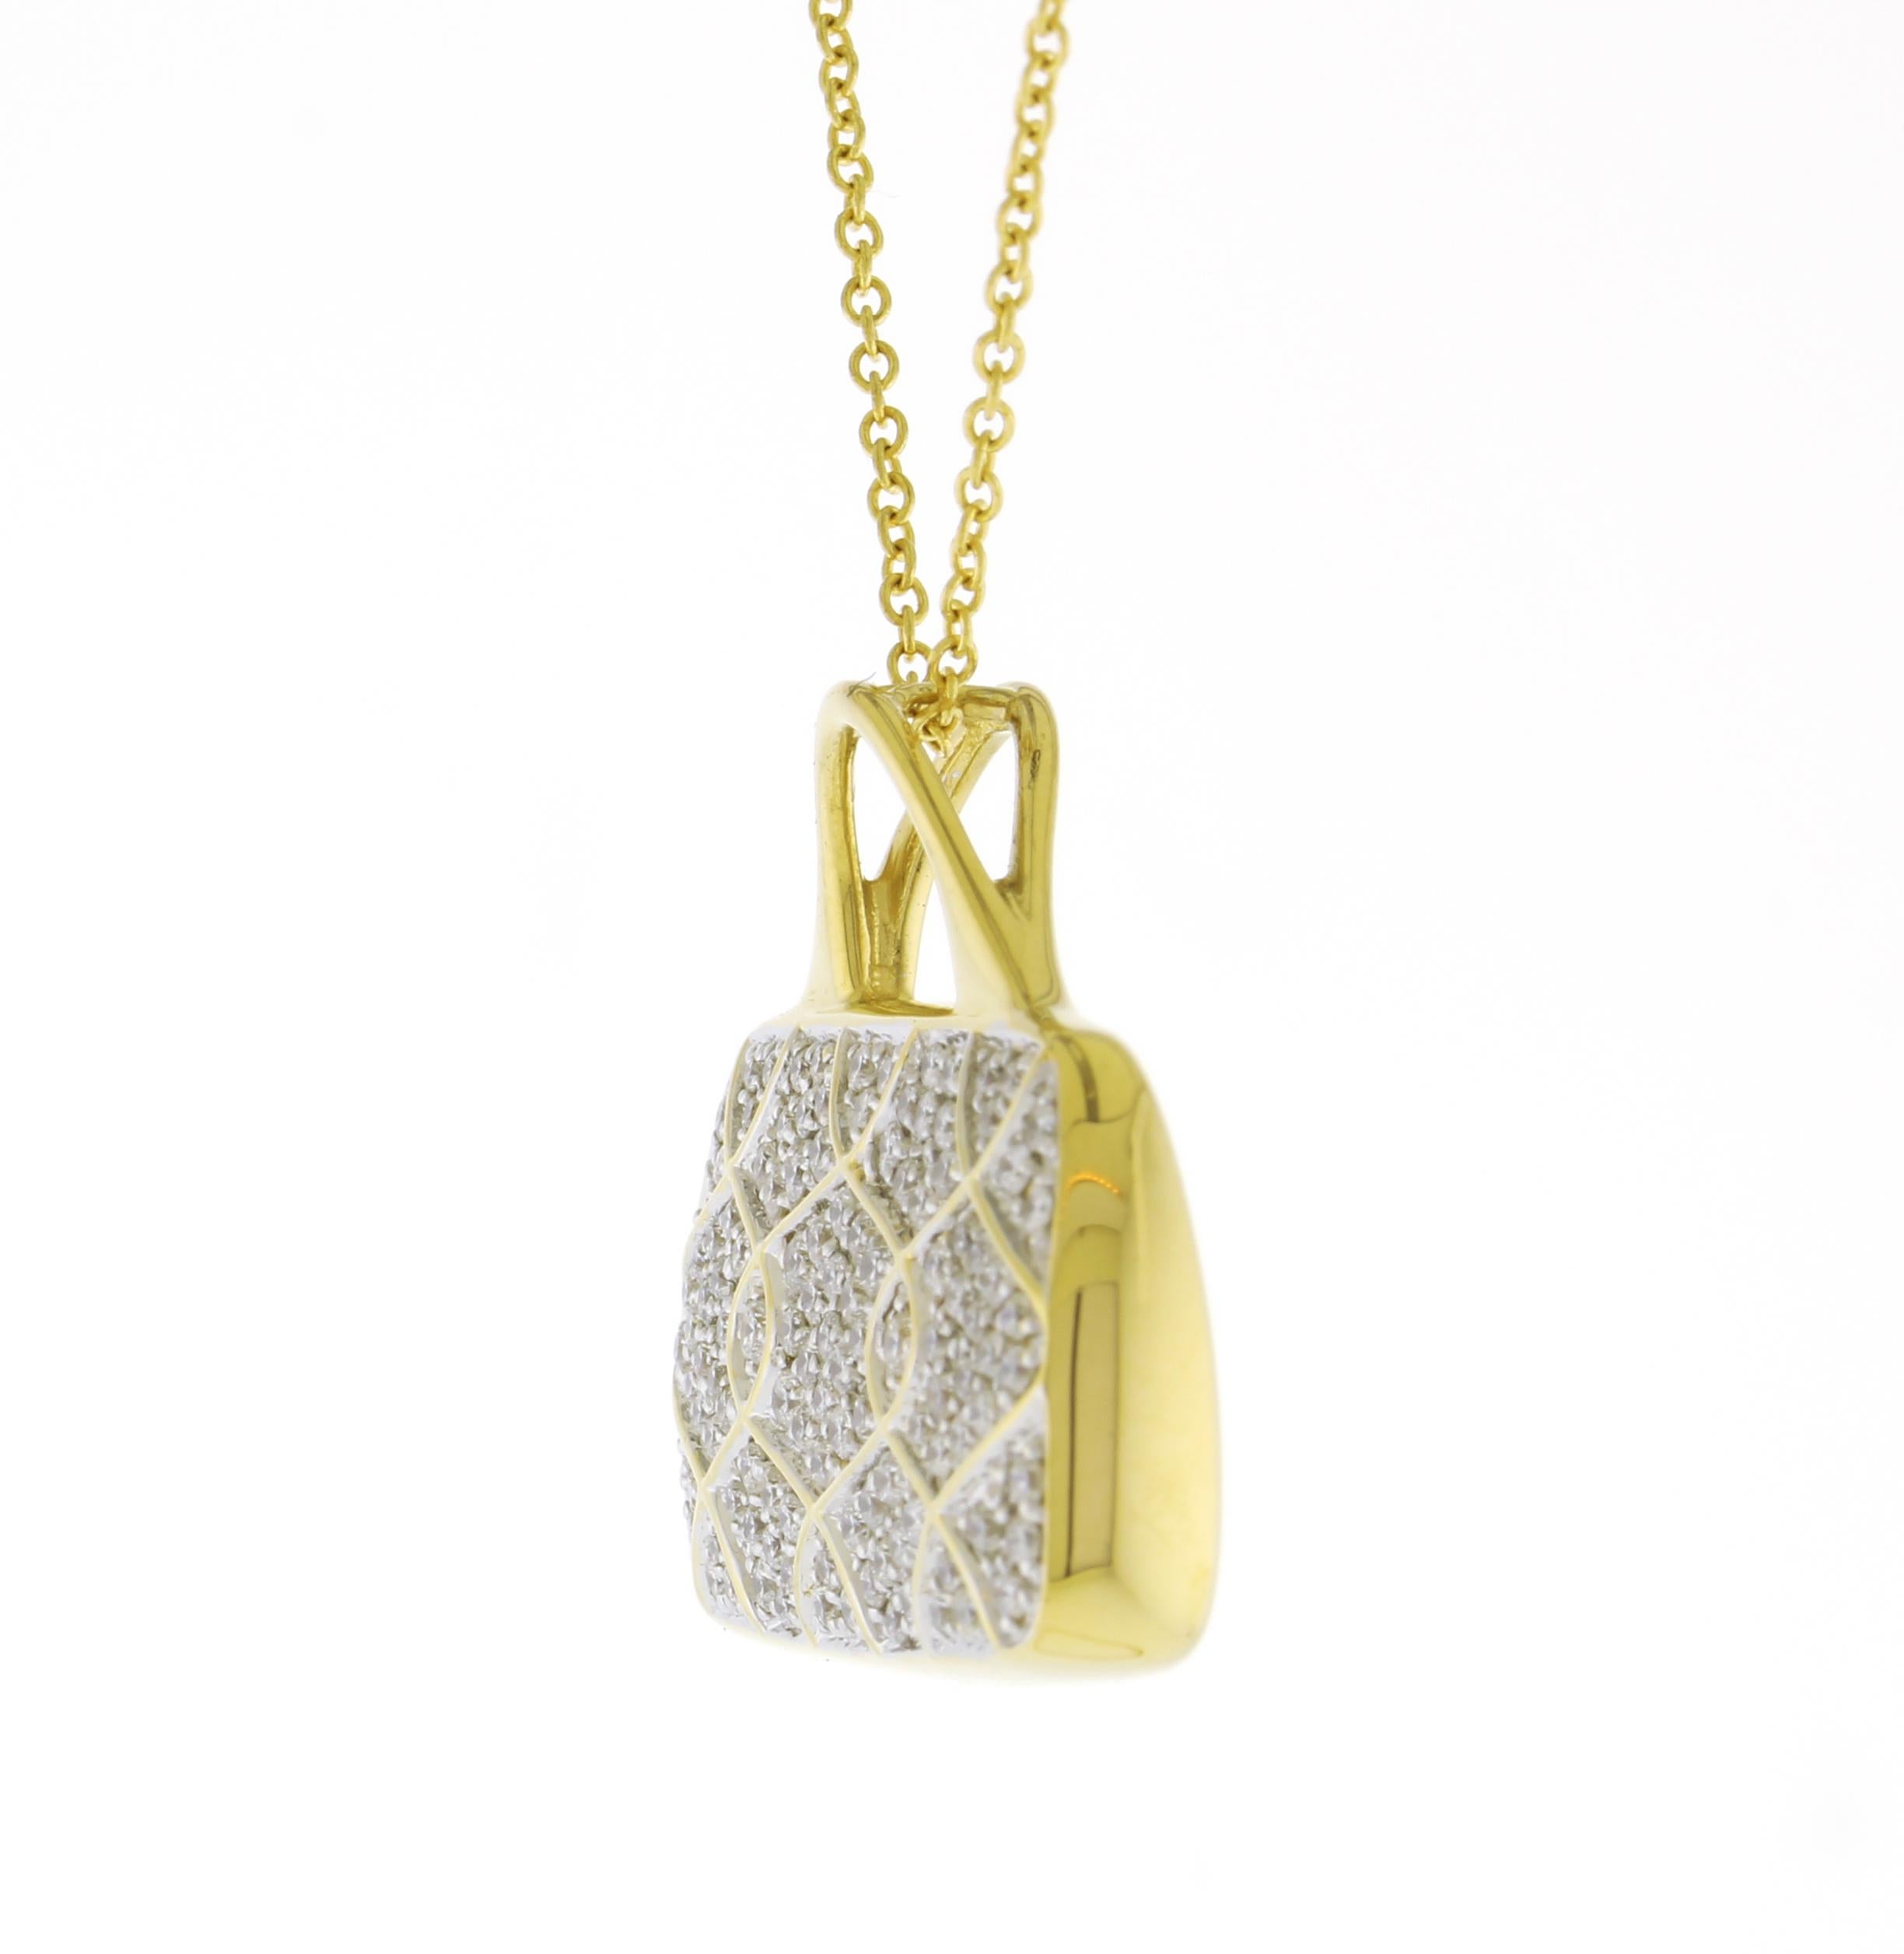 Brilliant Cut Mirabelle Diamond Purse Pendant For Sale